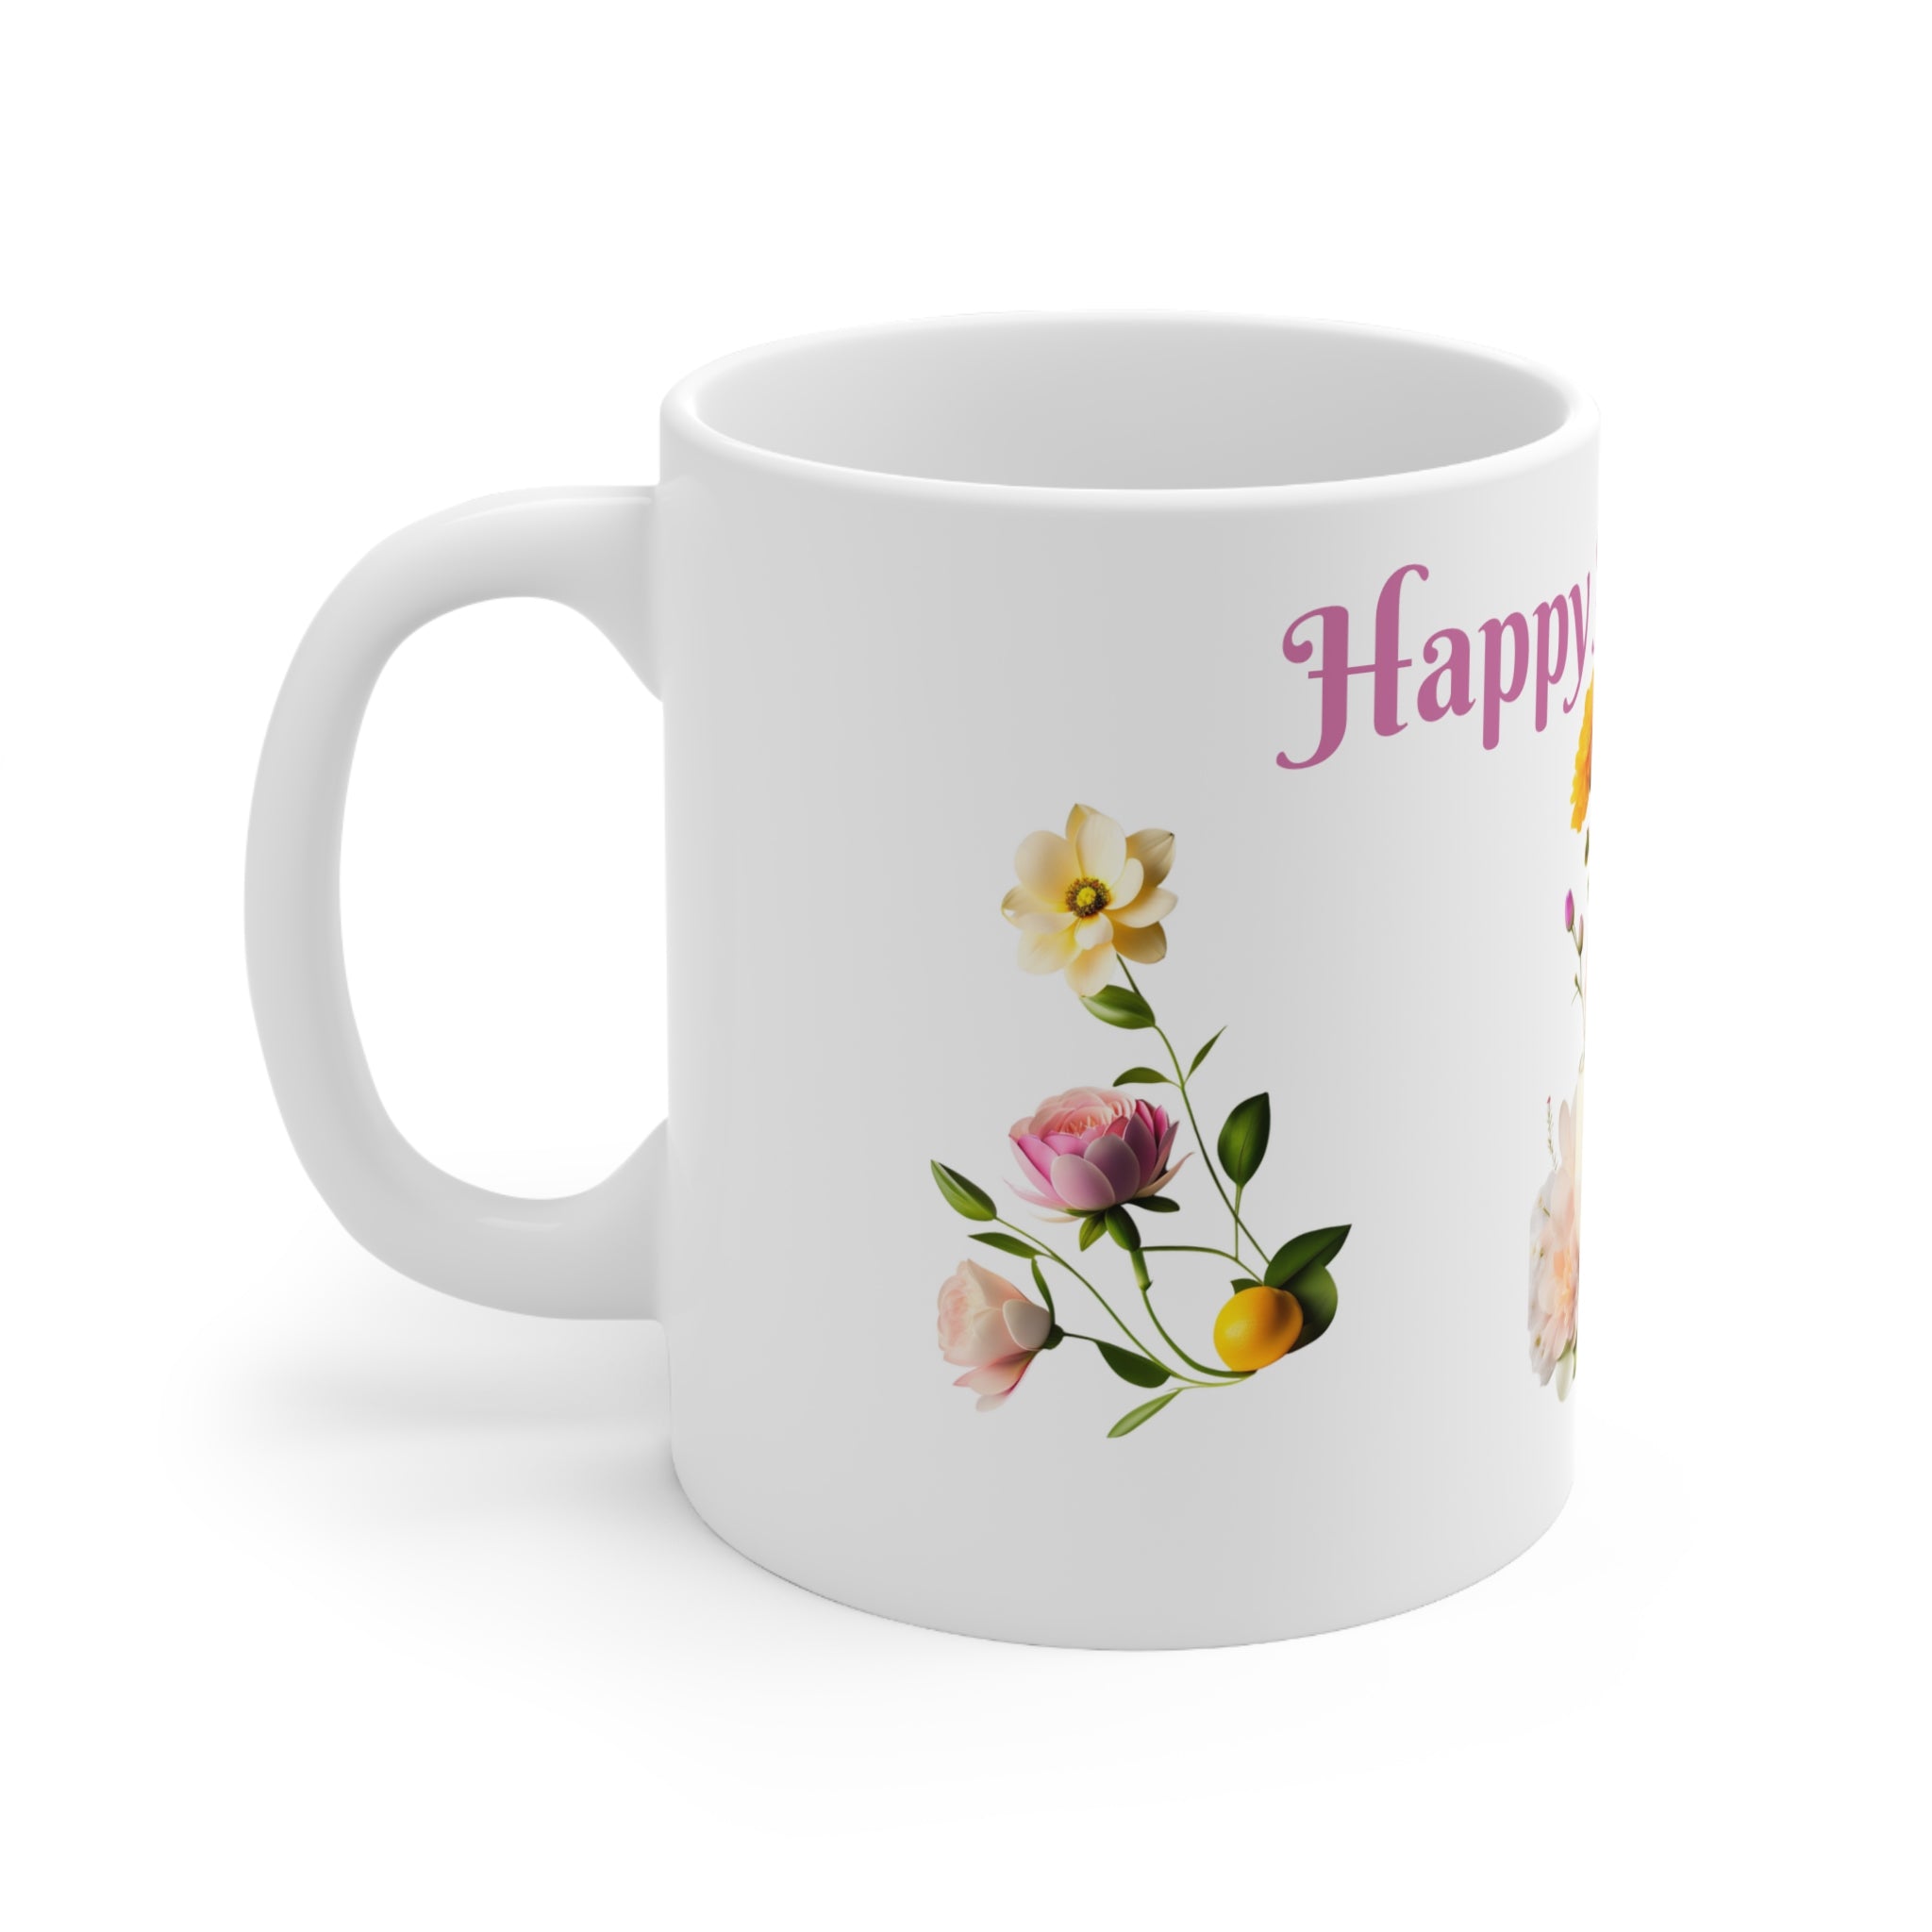 11oz floral anniversary mug, ceramic gift, coffee cup, love bird design, cake decor cake pattern, romantic gift" unique love bird gift